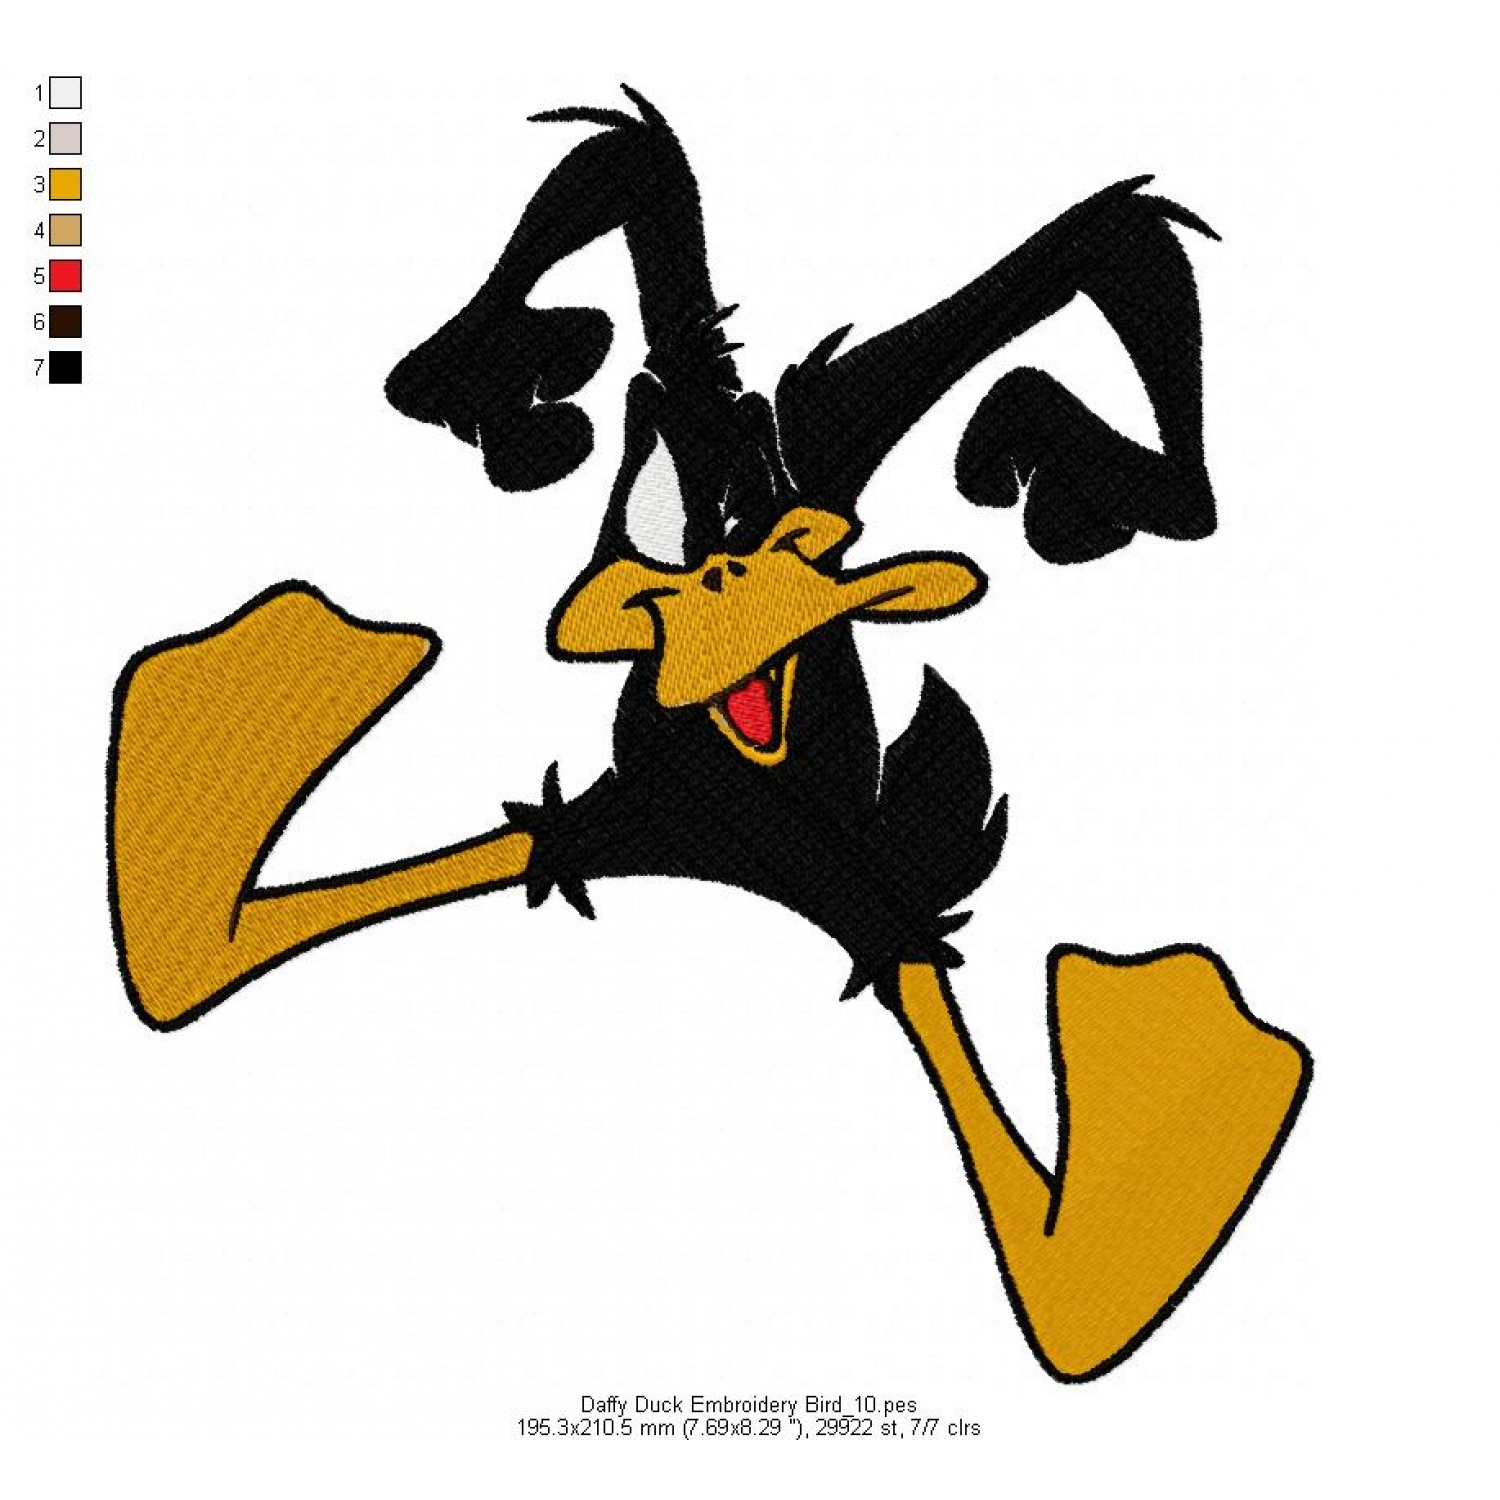 Daffy%20Duck%20Embroidery%20Bird%2010-1500x1500.jpg